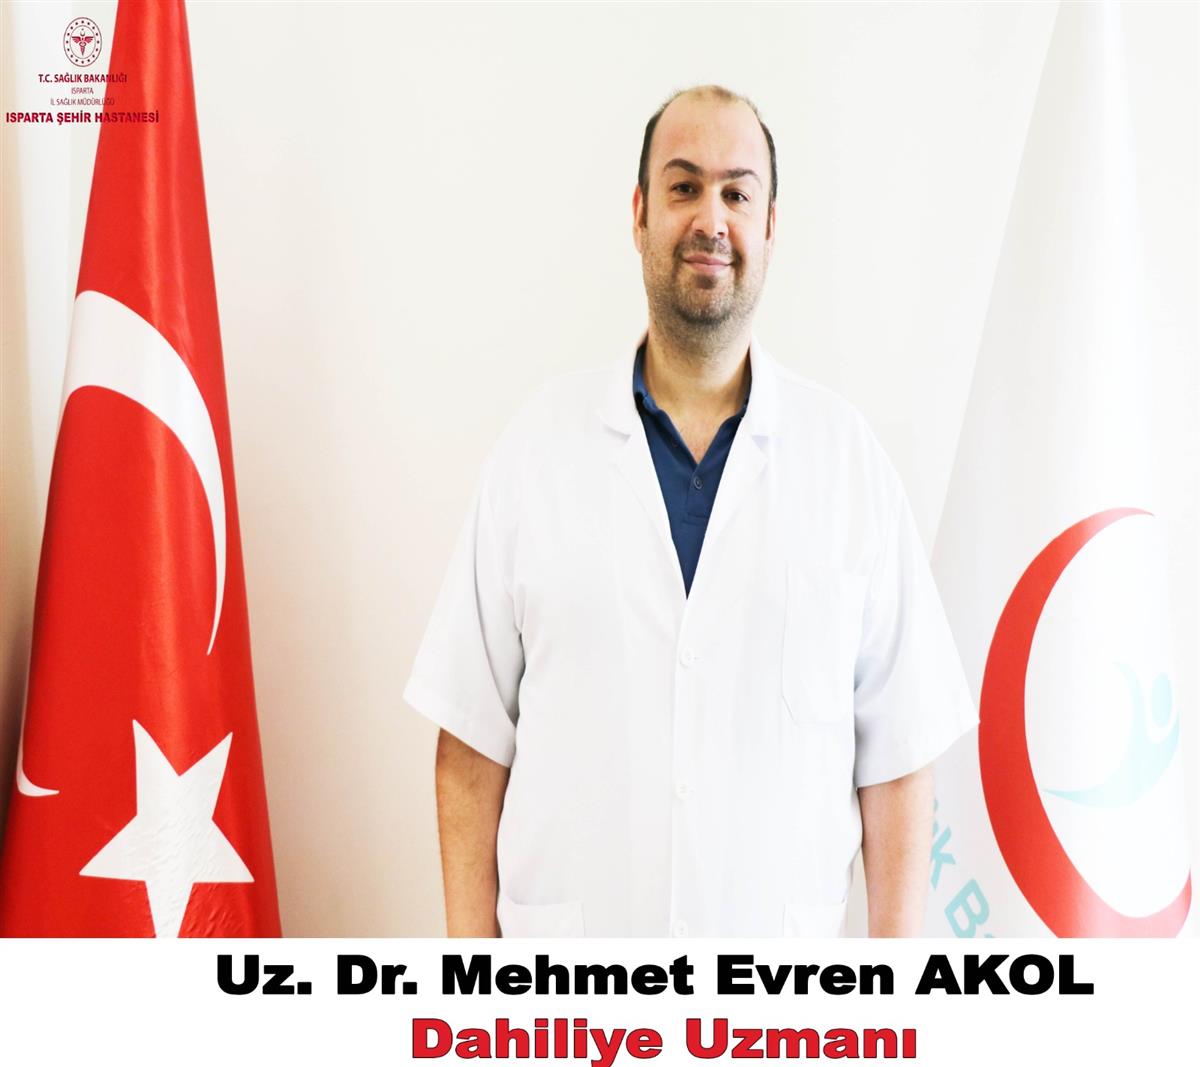 Uz. Dr. Mehmet Evren AKOL.jpg